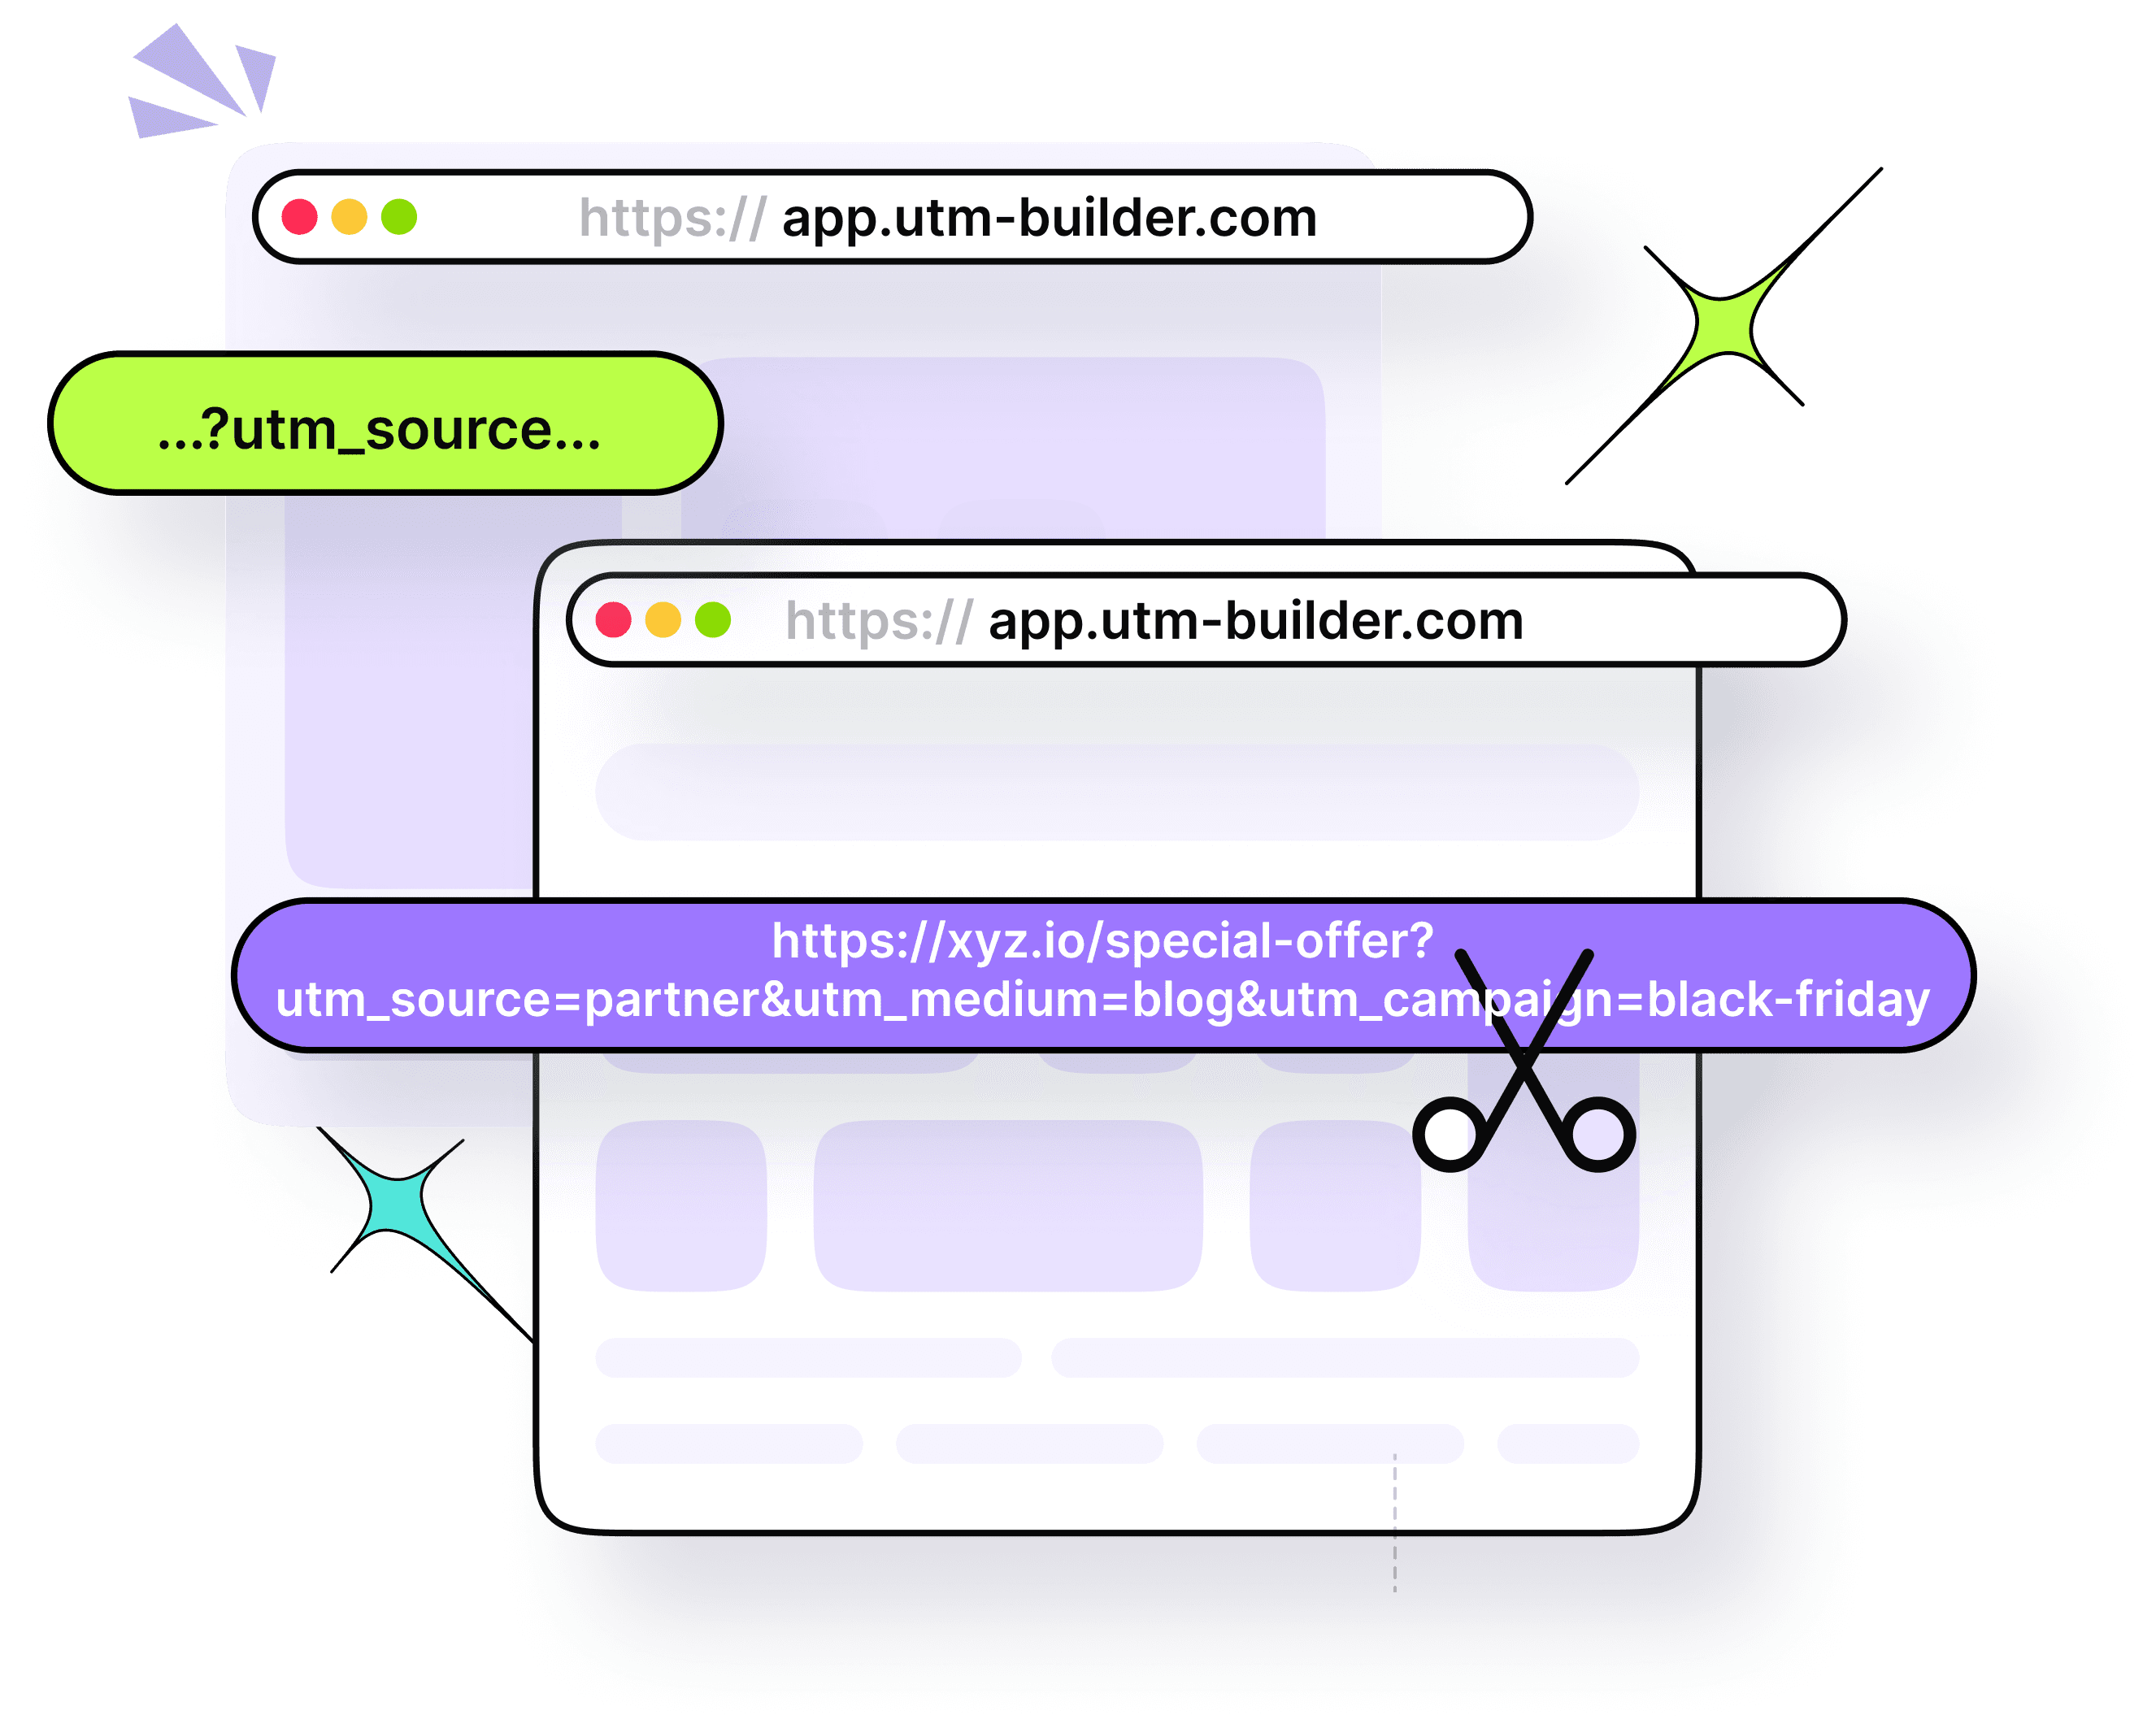 Limit the length of UTM URLs